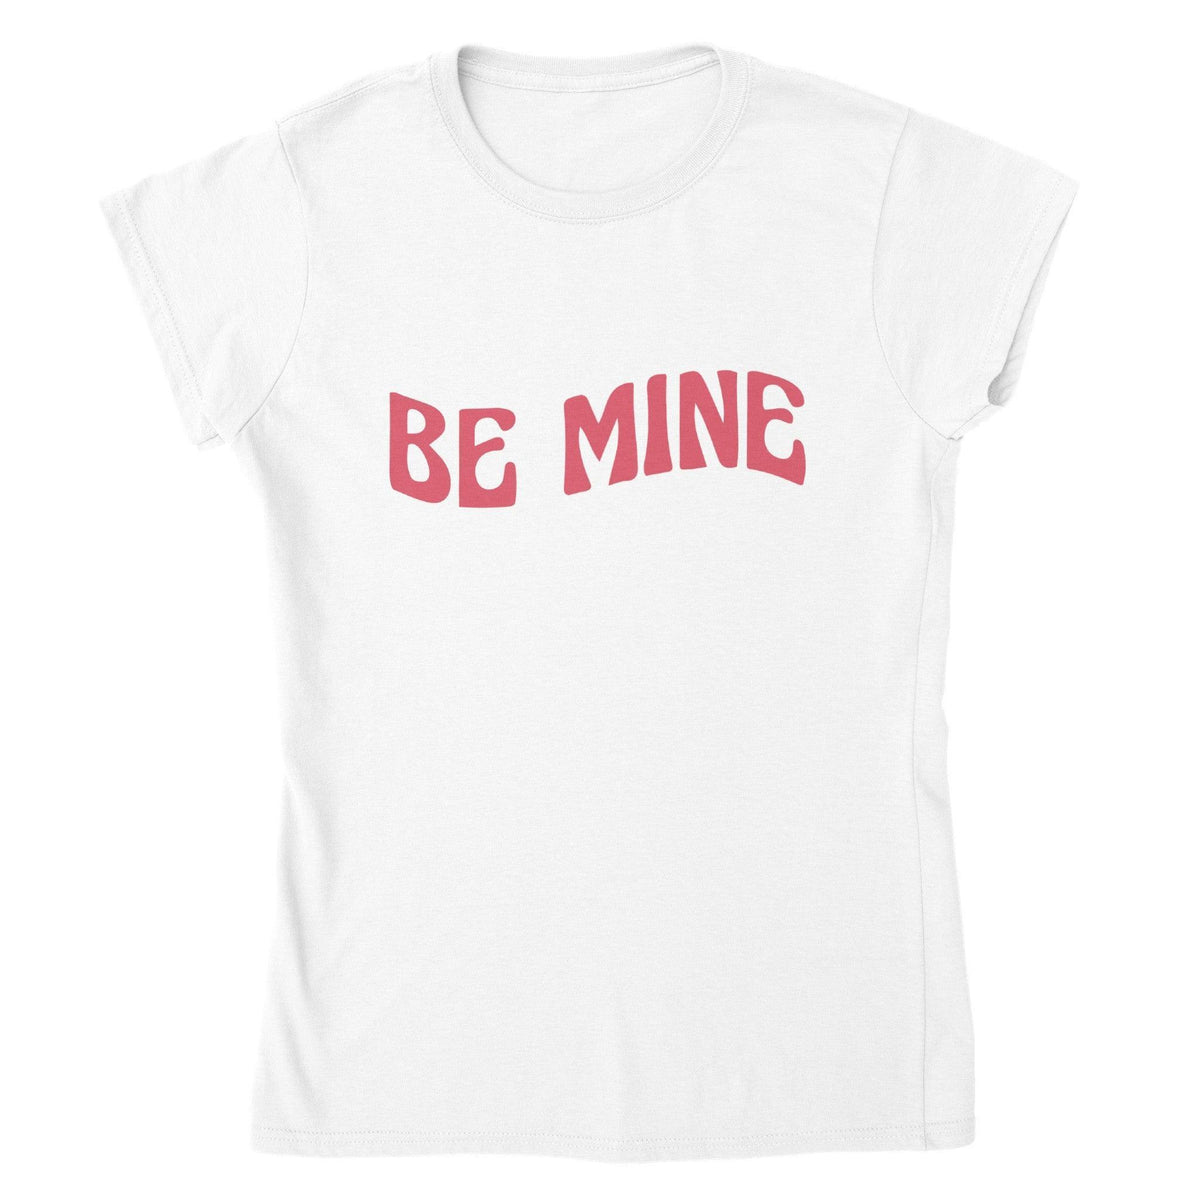 BE MINE T-shirt-Regular Fit Tee-StylinArts